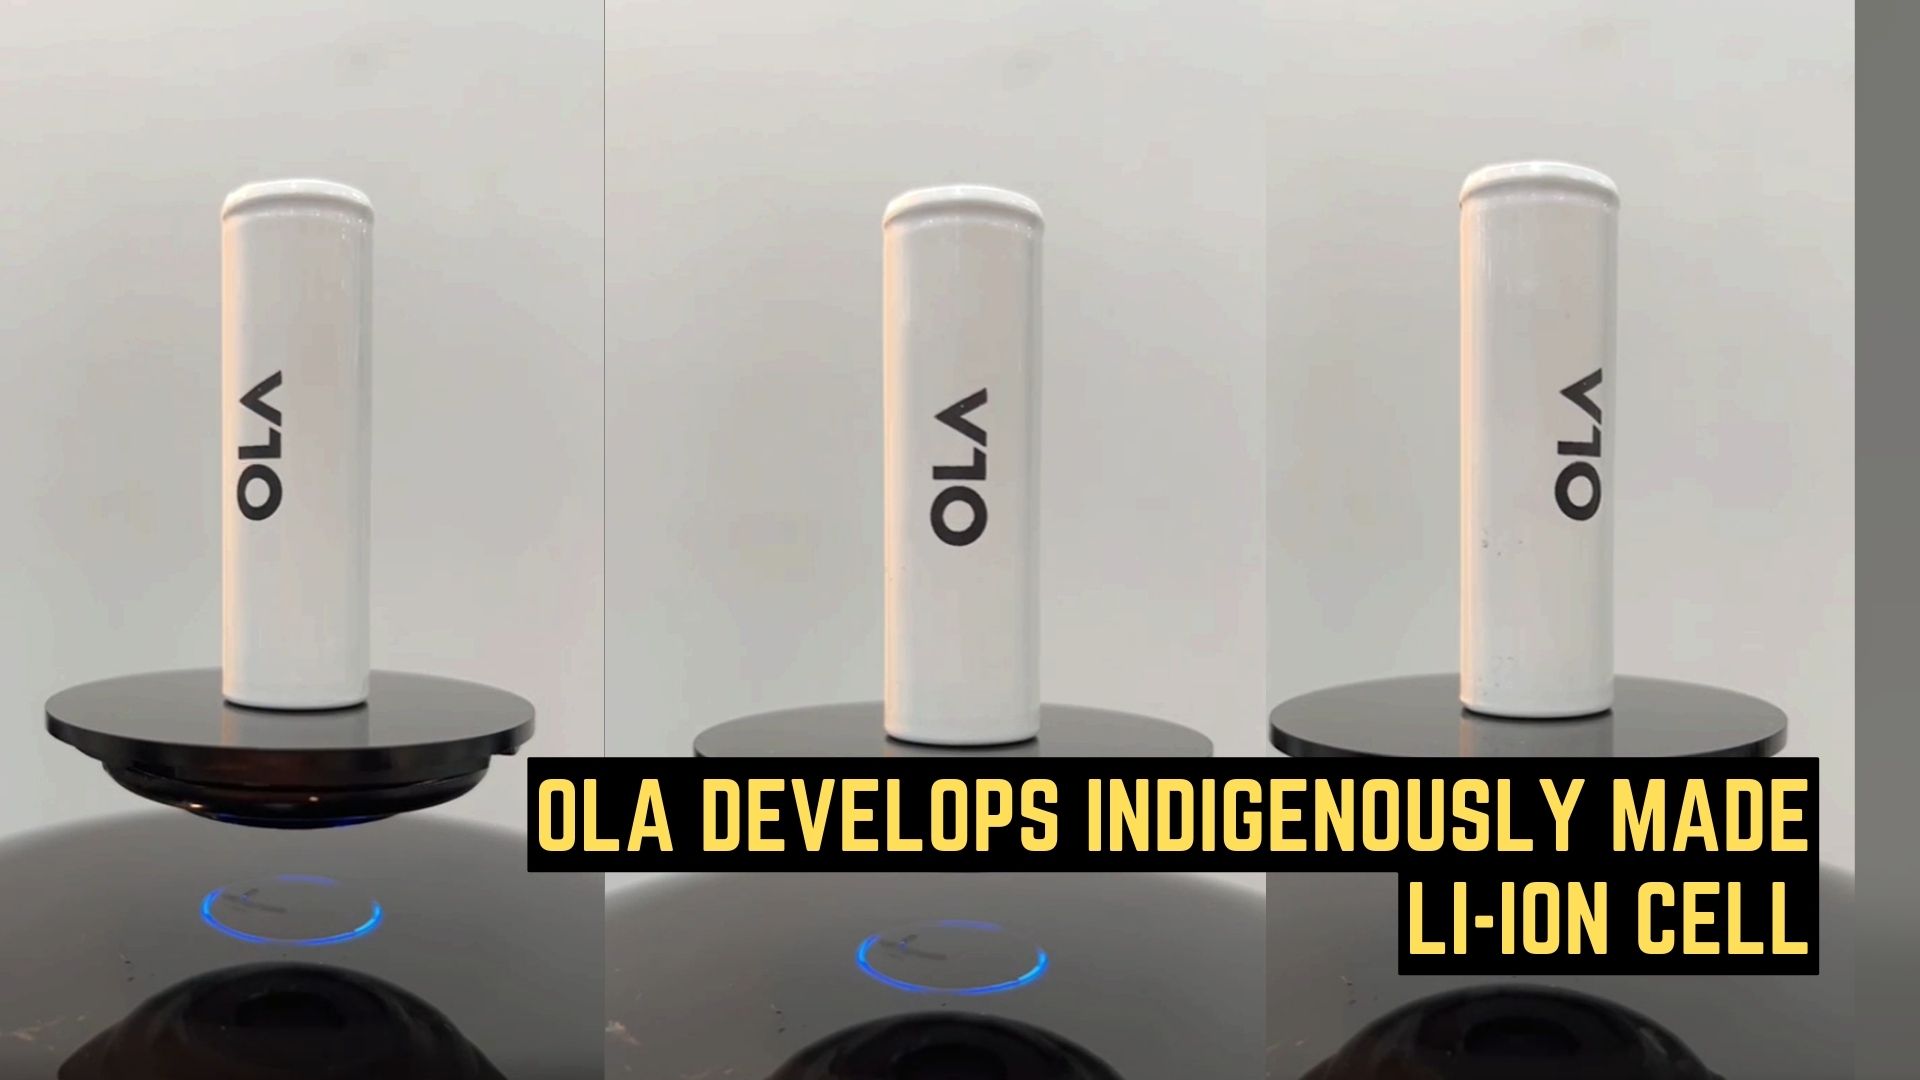 https://e-vehicleinfo.com/ola-develops-indigenously-made-li-ion-cell/